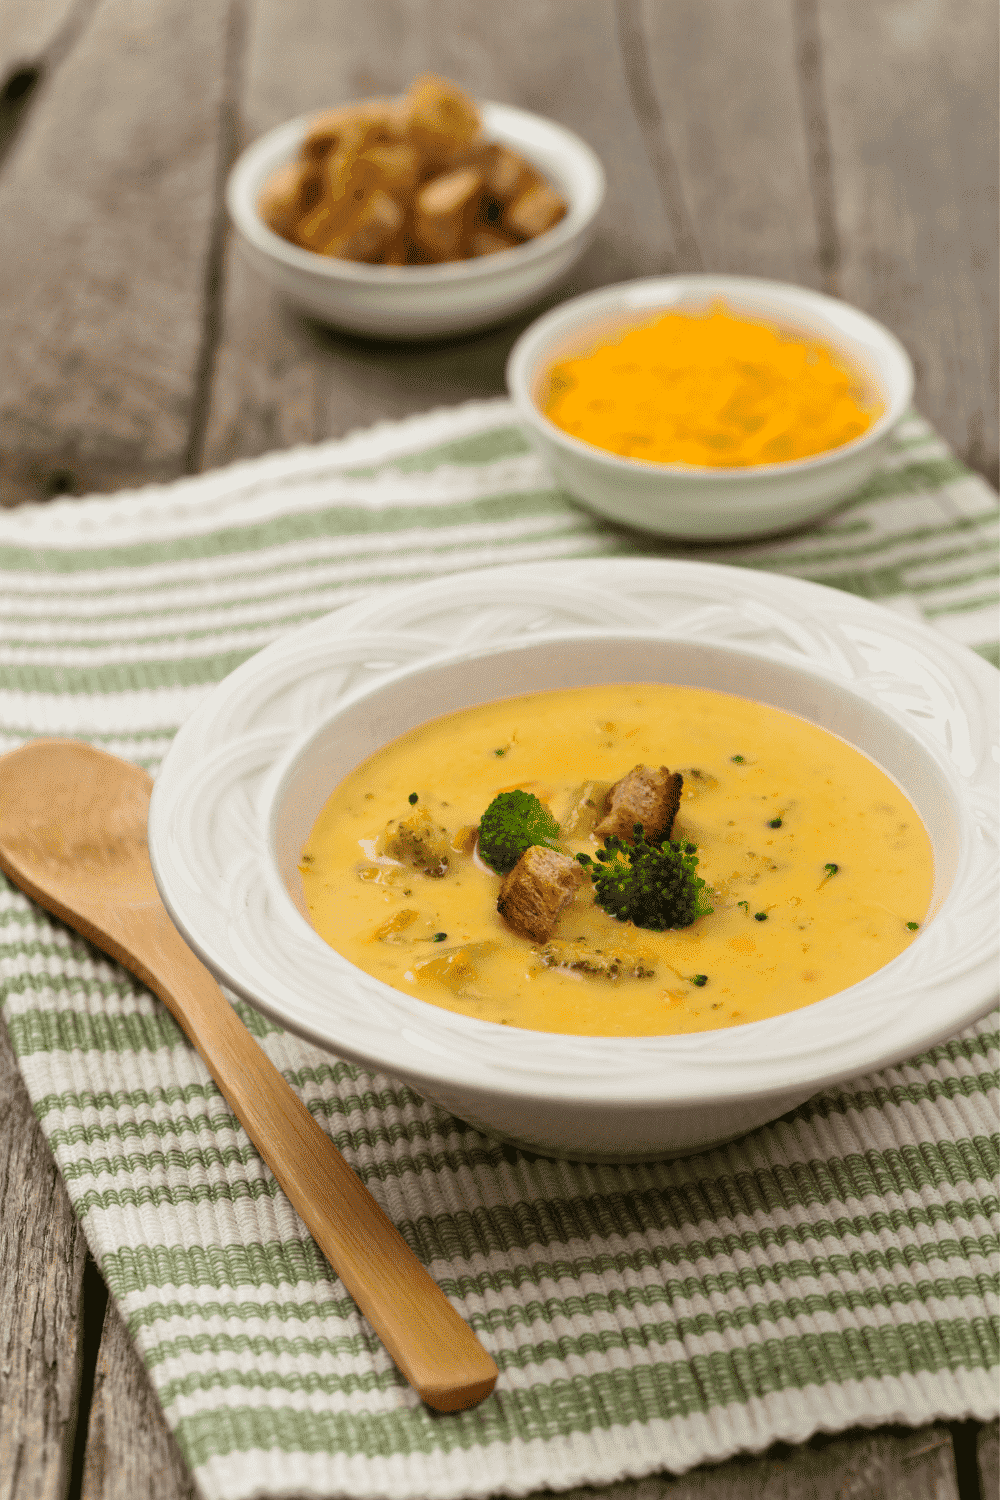 Ina Garten's Broccoli Cheddar Soup